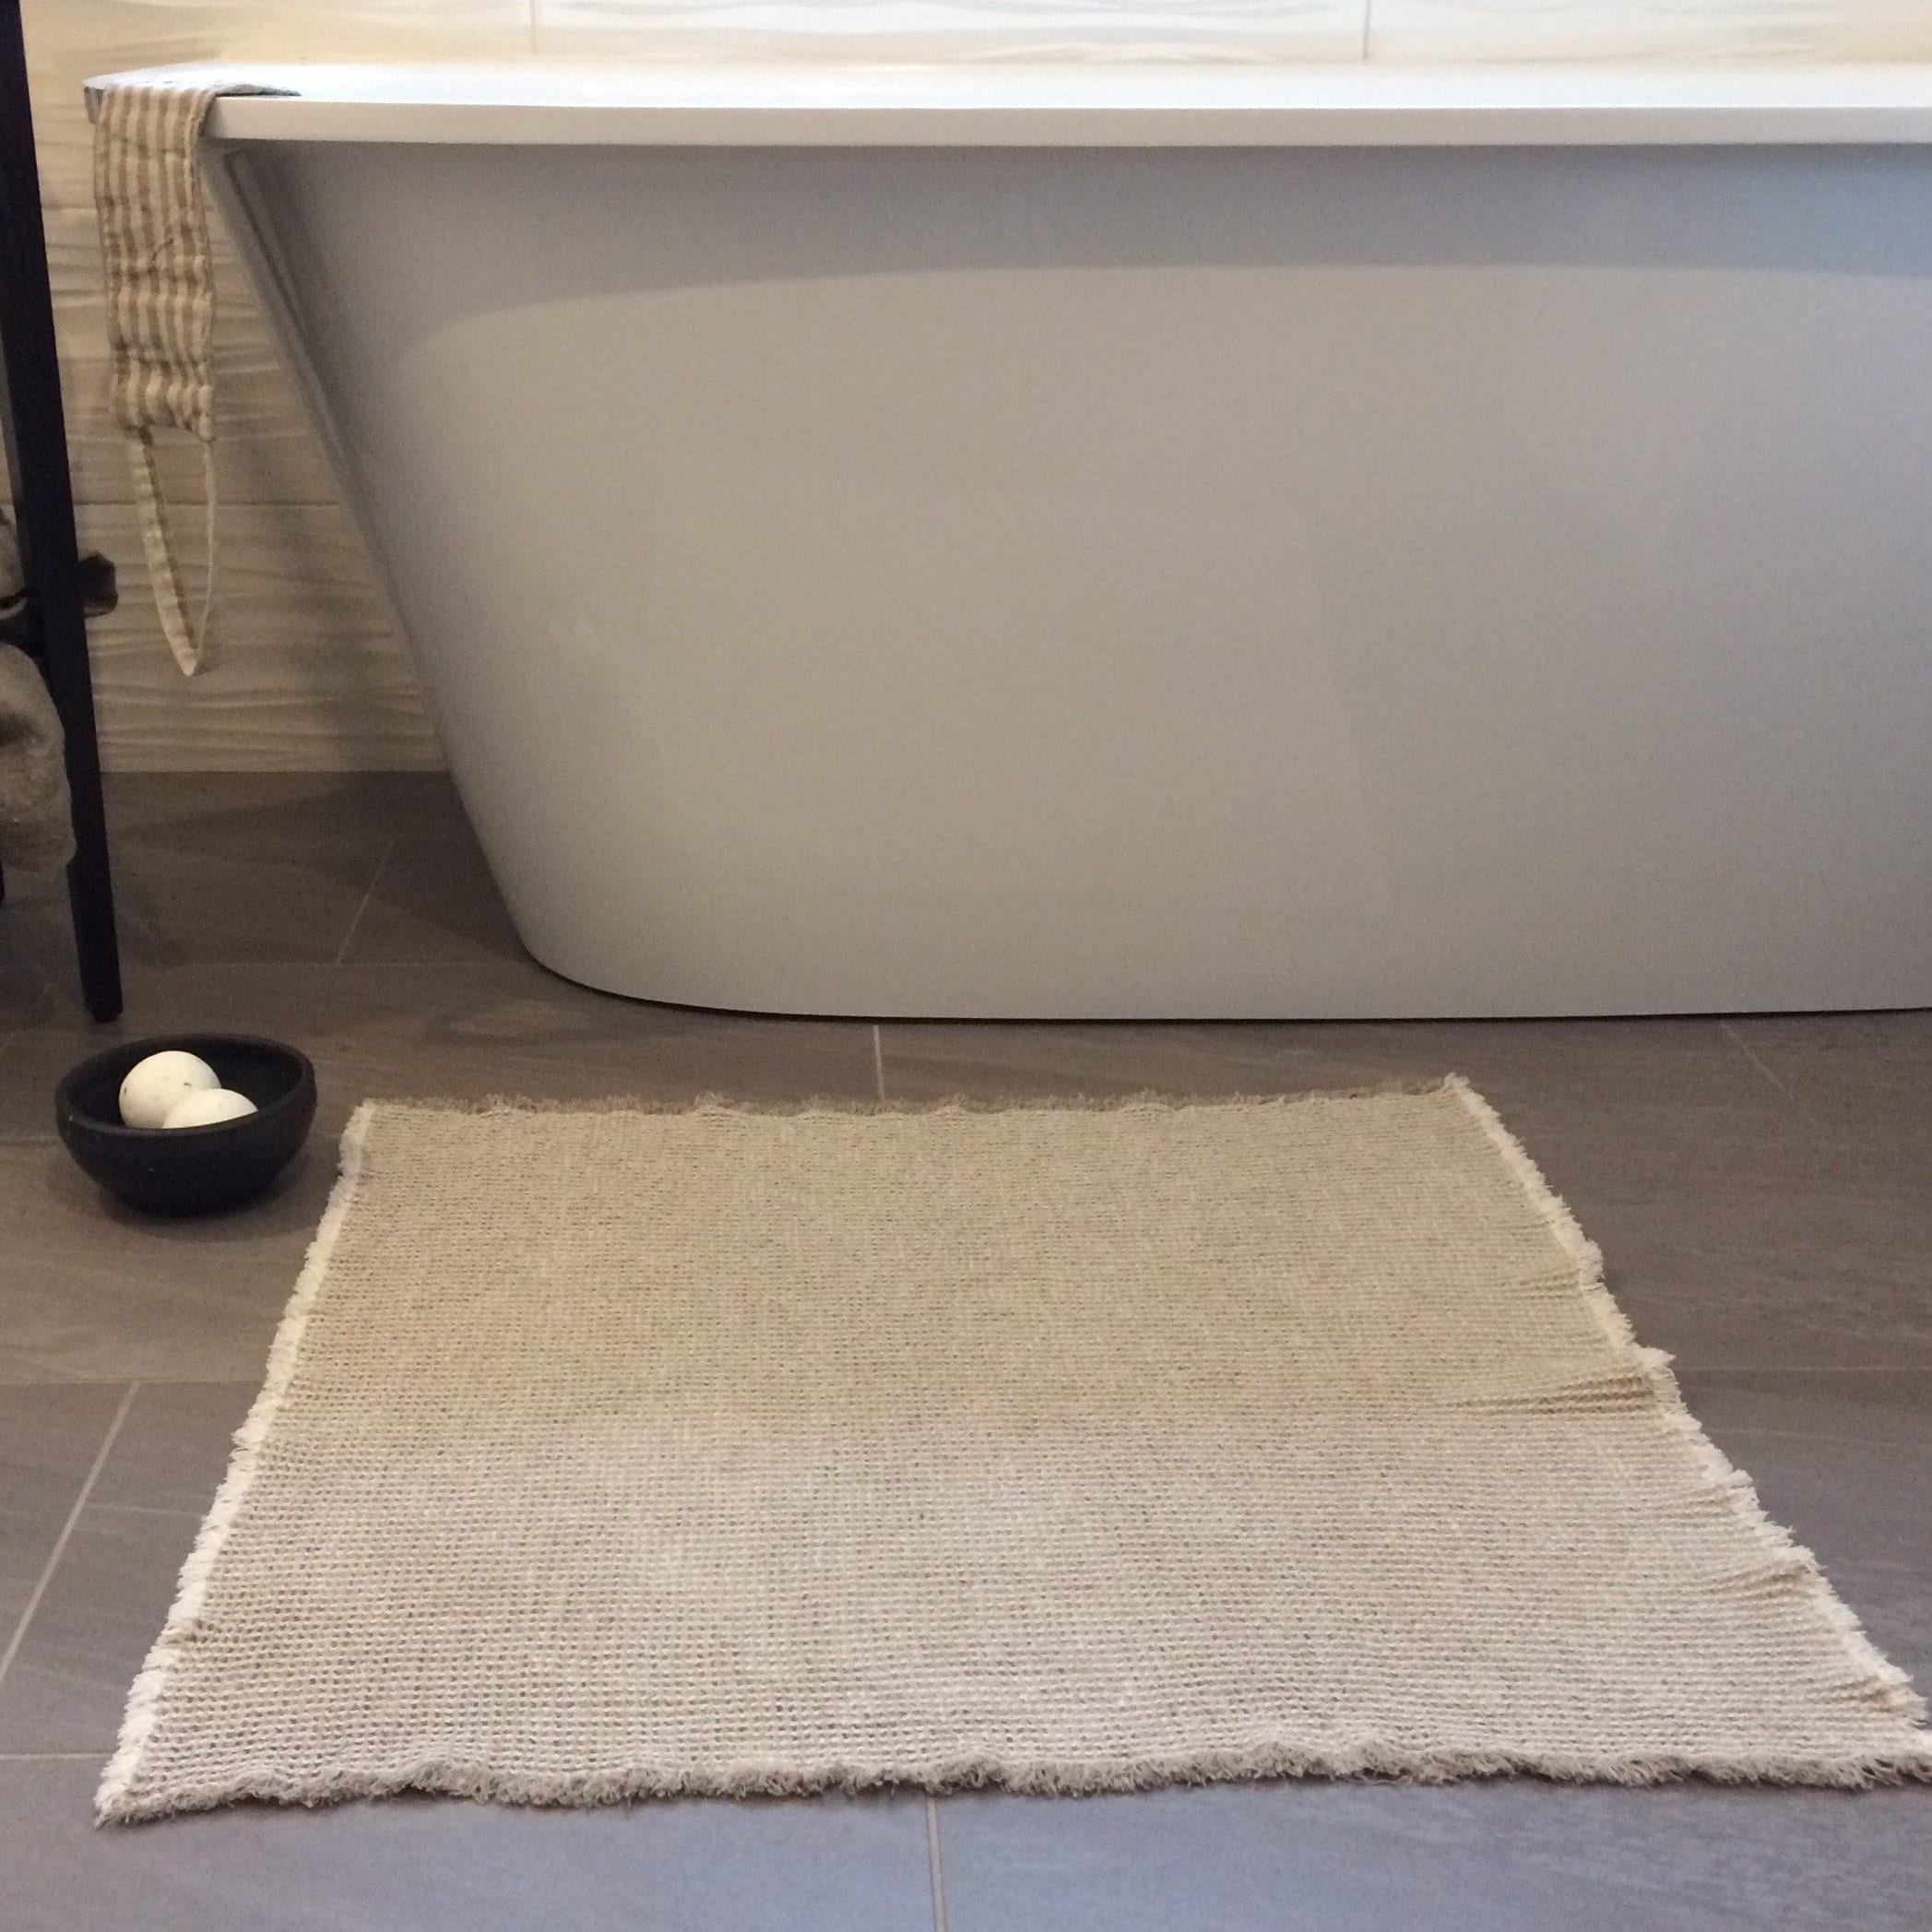 Water-absorbing Mat Bathroom Door Mats Soft Refreshing Dry Mat